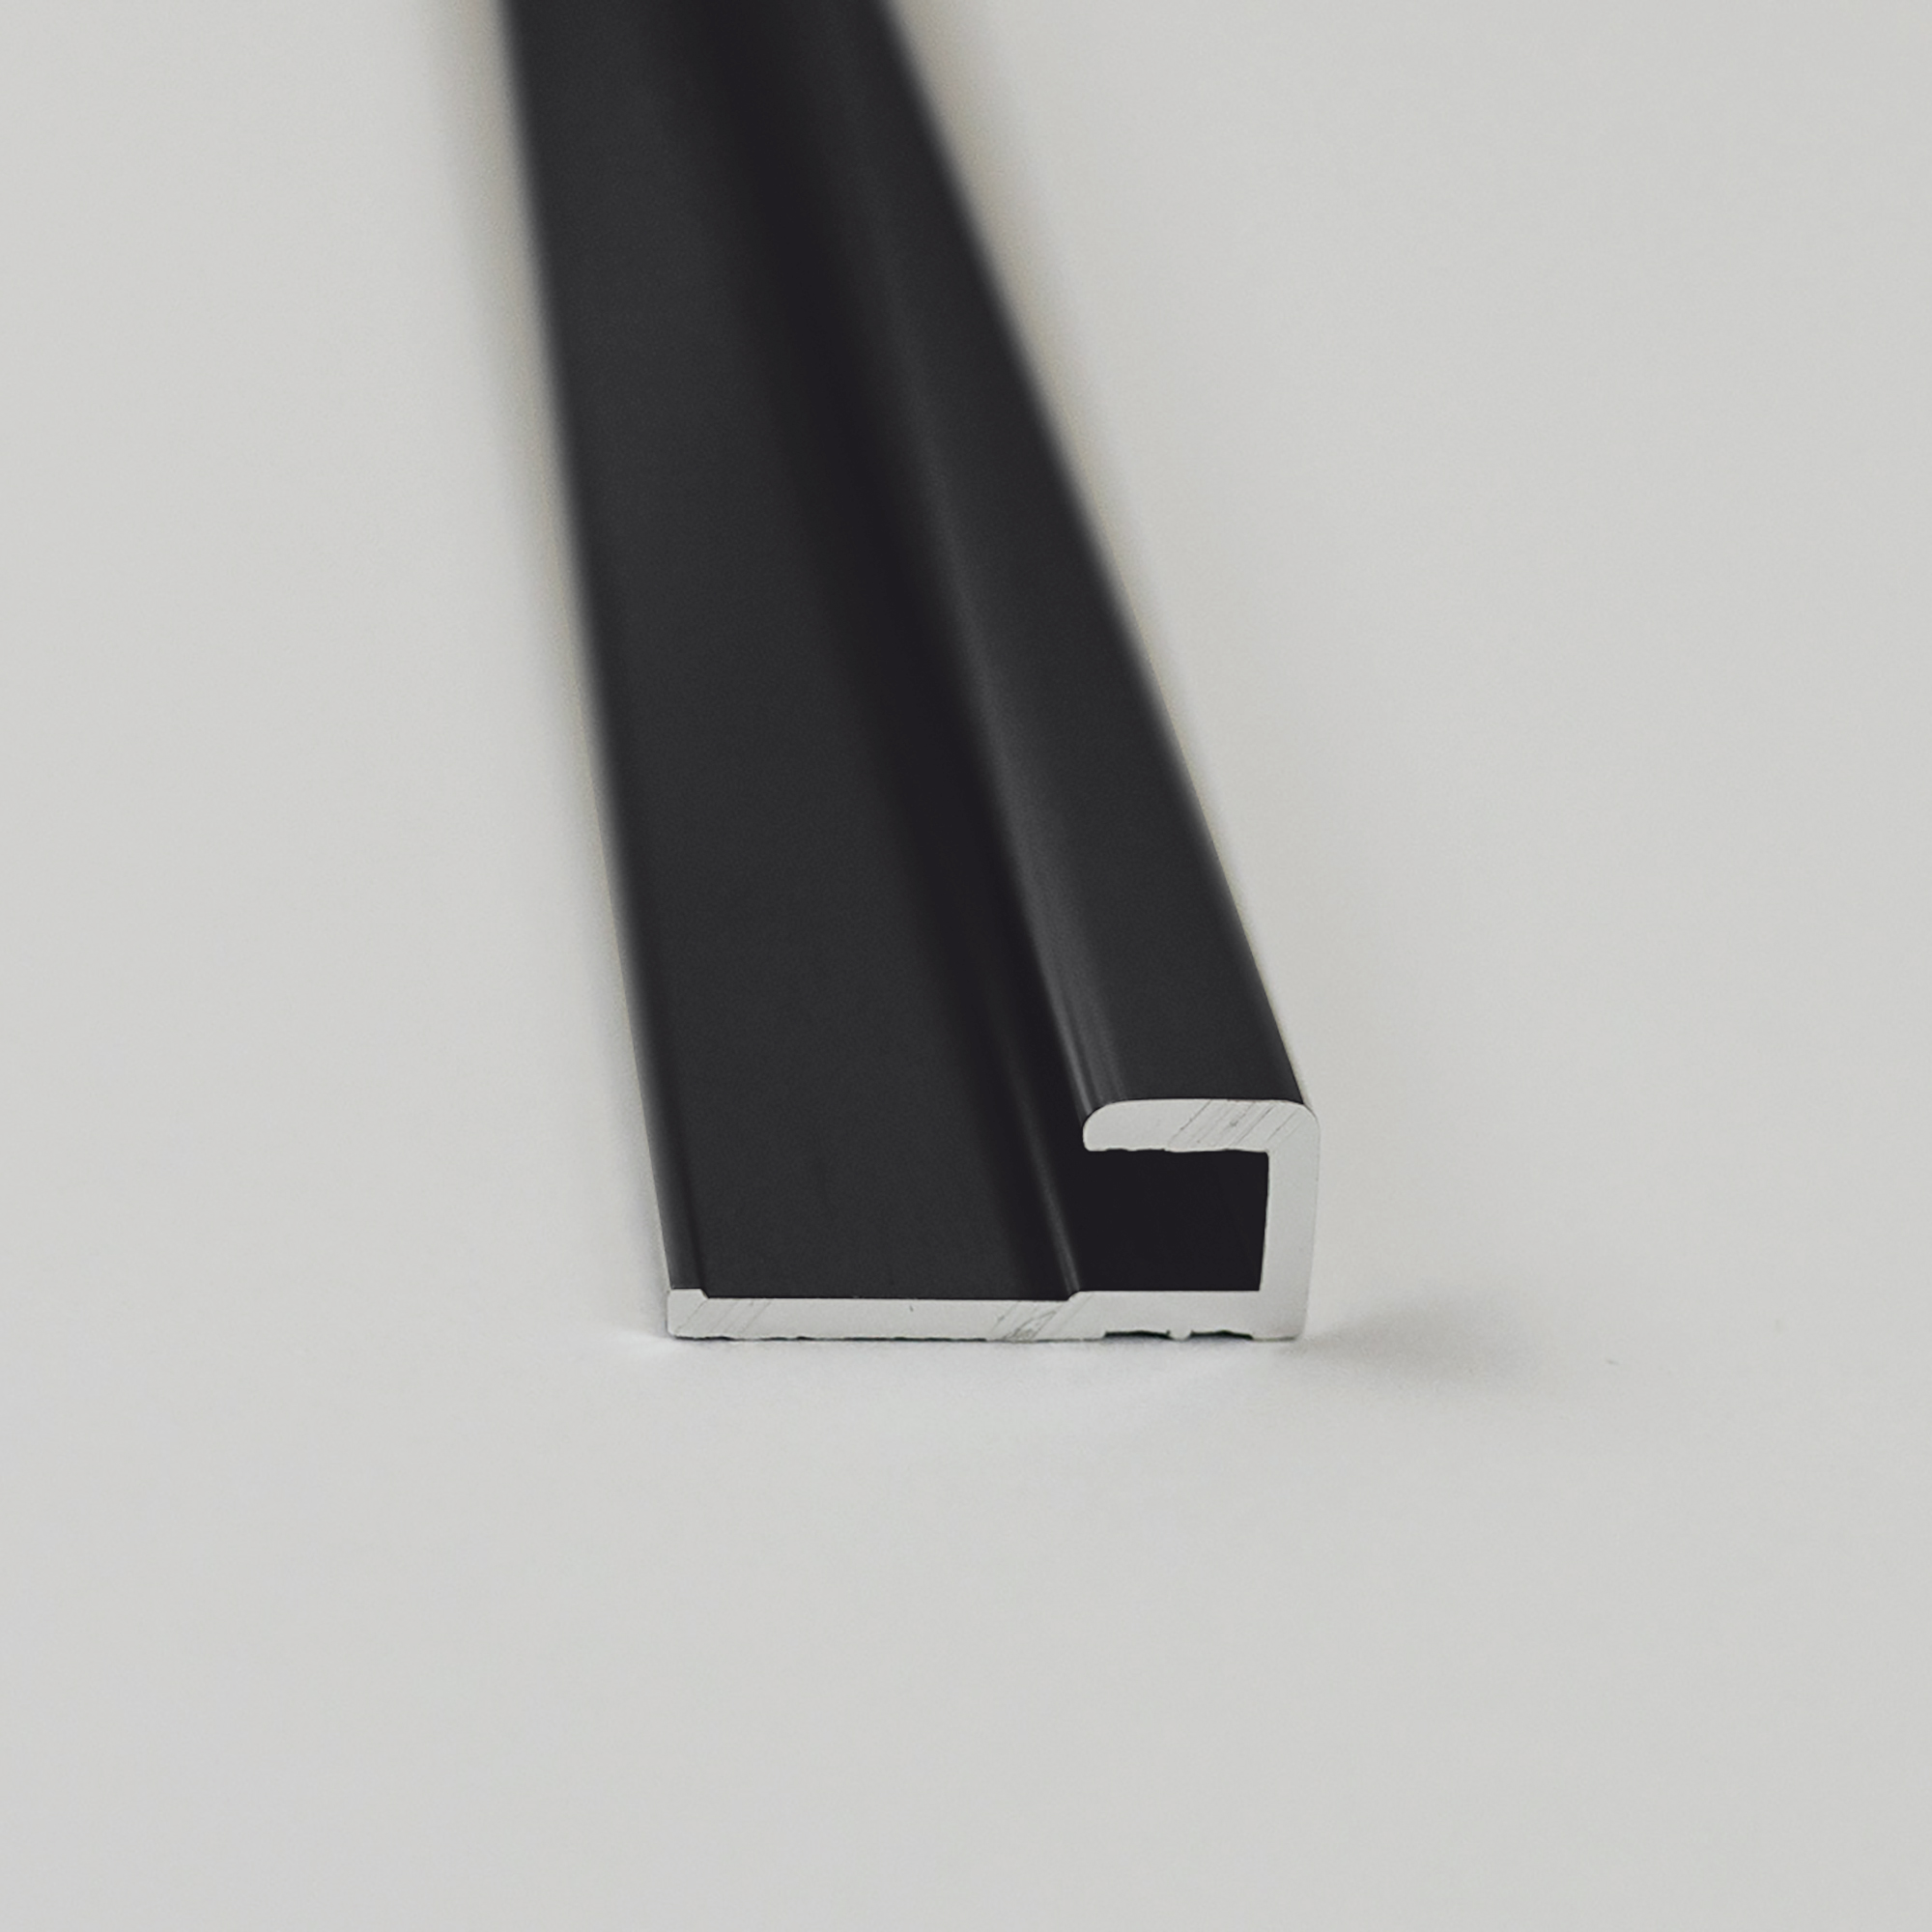 Abschlussprofil für Rückwandplatten, eckig, schwarz matt, 2550 mm + product picture